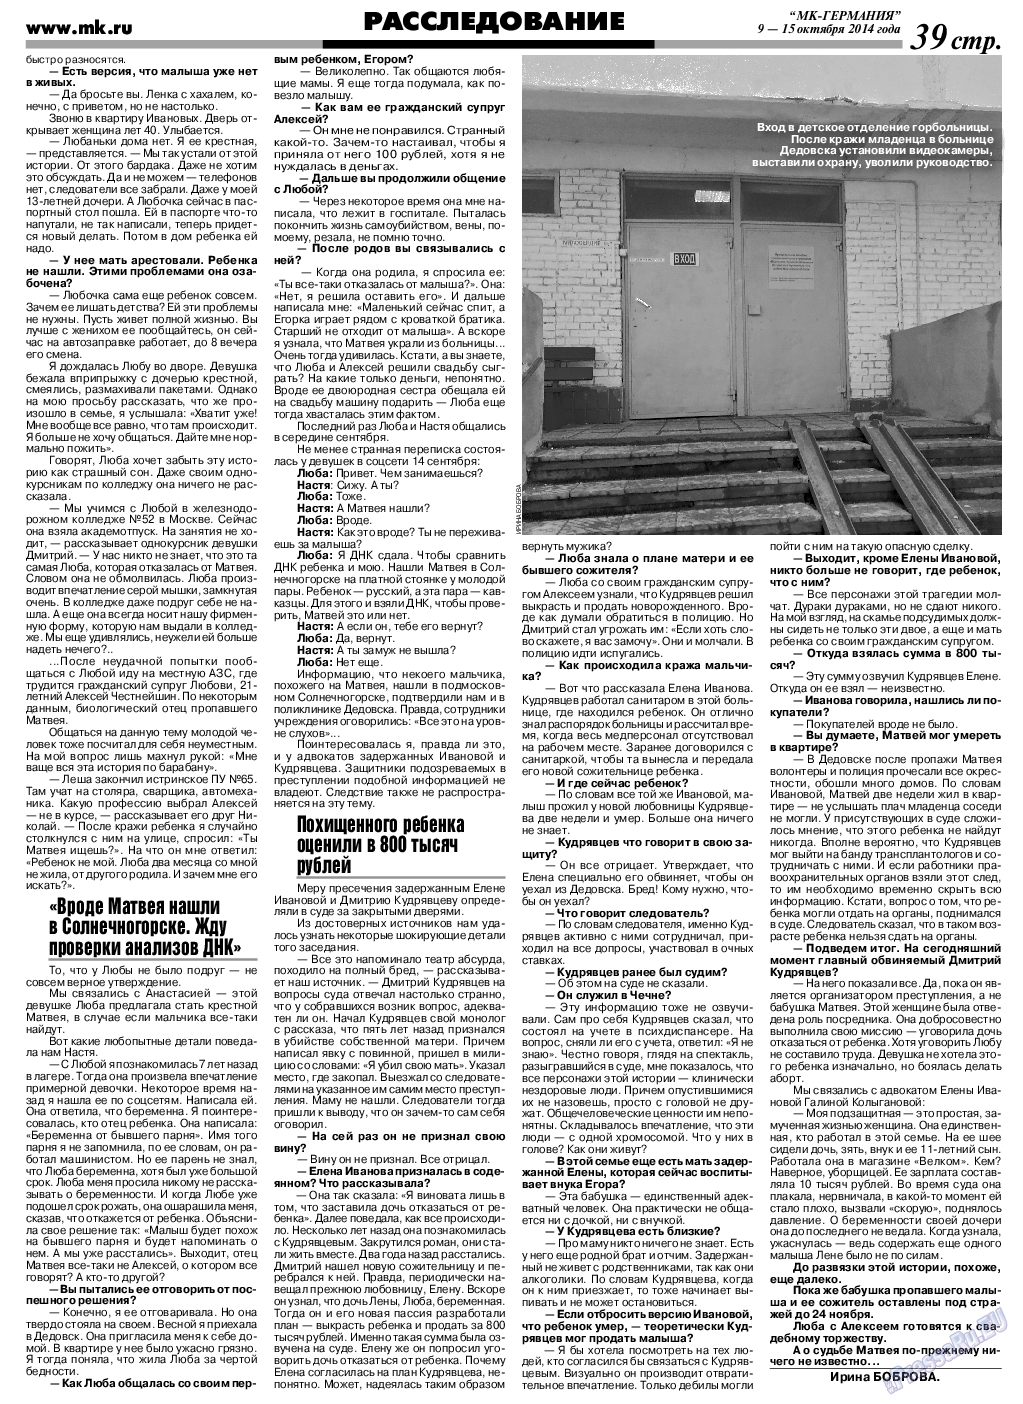 МК-Германия, газета. 2014 №41 стр.39